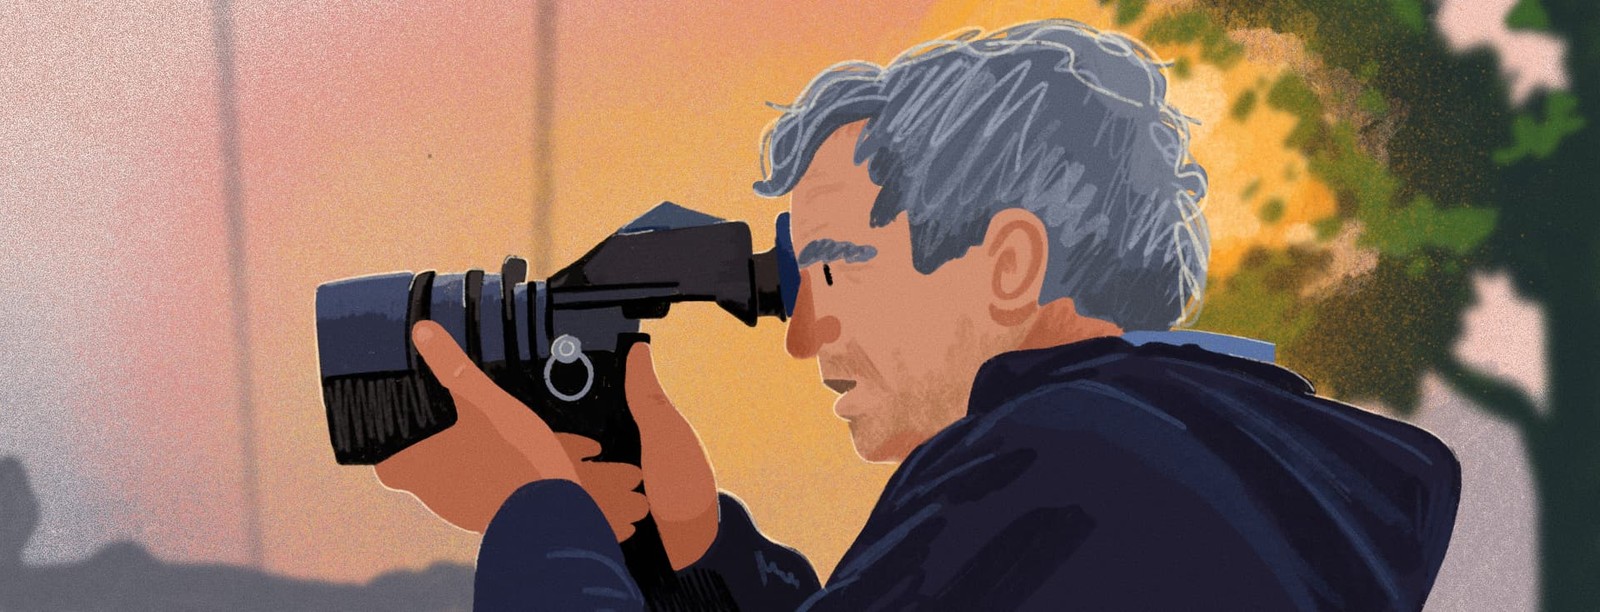 Defining truthfulness: Alfonso Cuaron